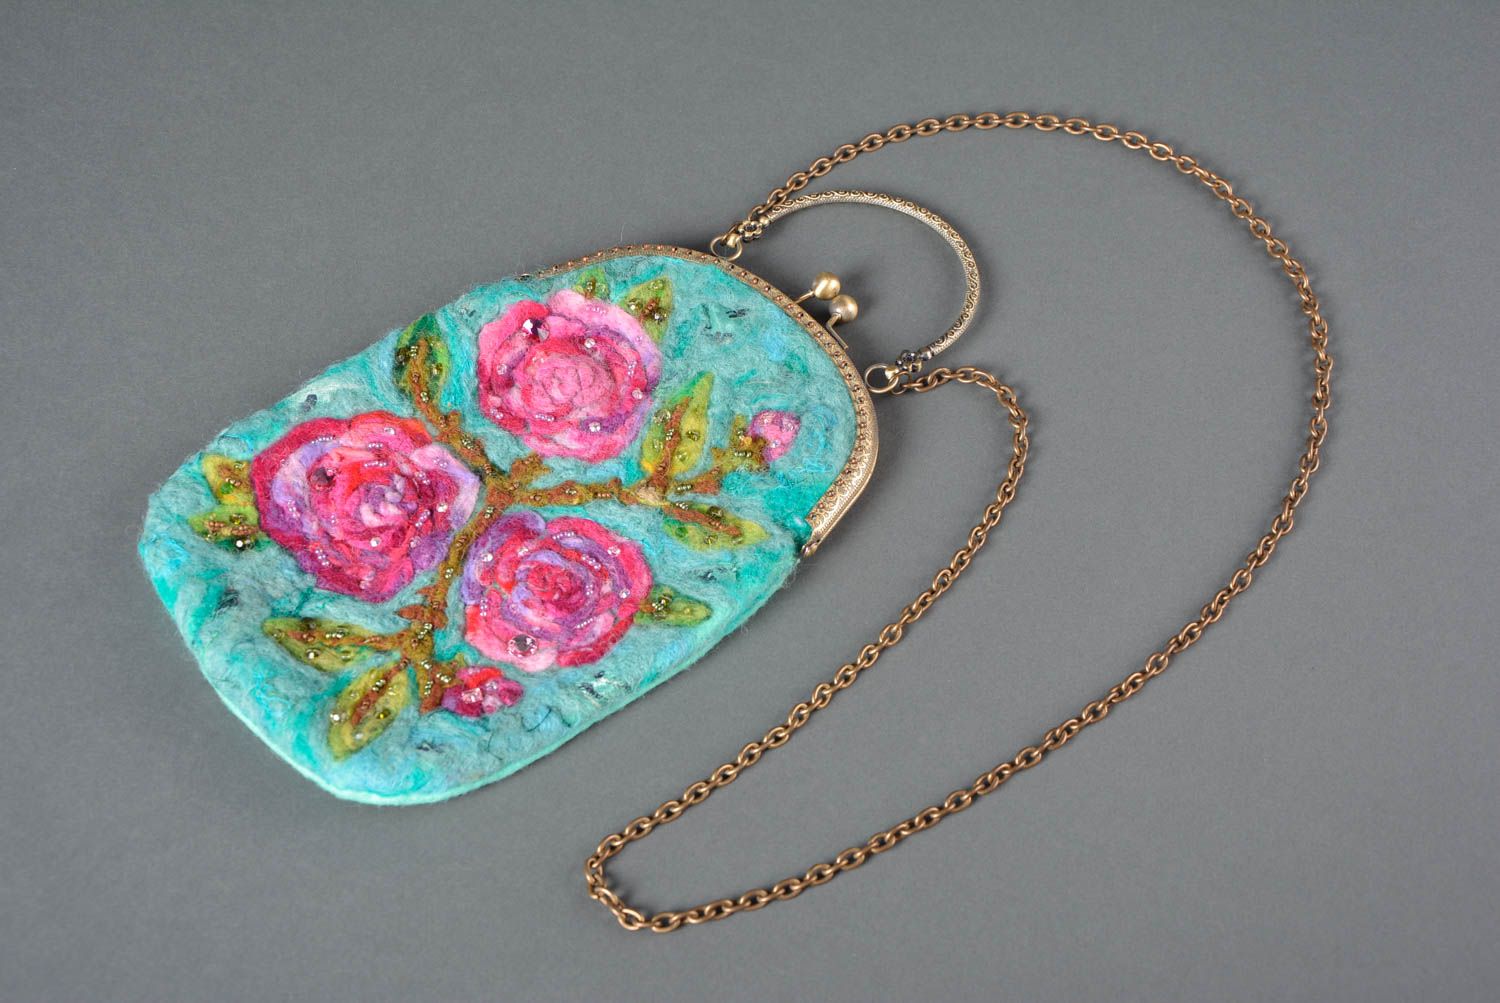 Handmade handbag unusual bag for girls felt handbag designer bag gift ideas photo 1